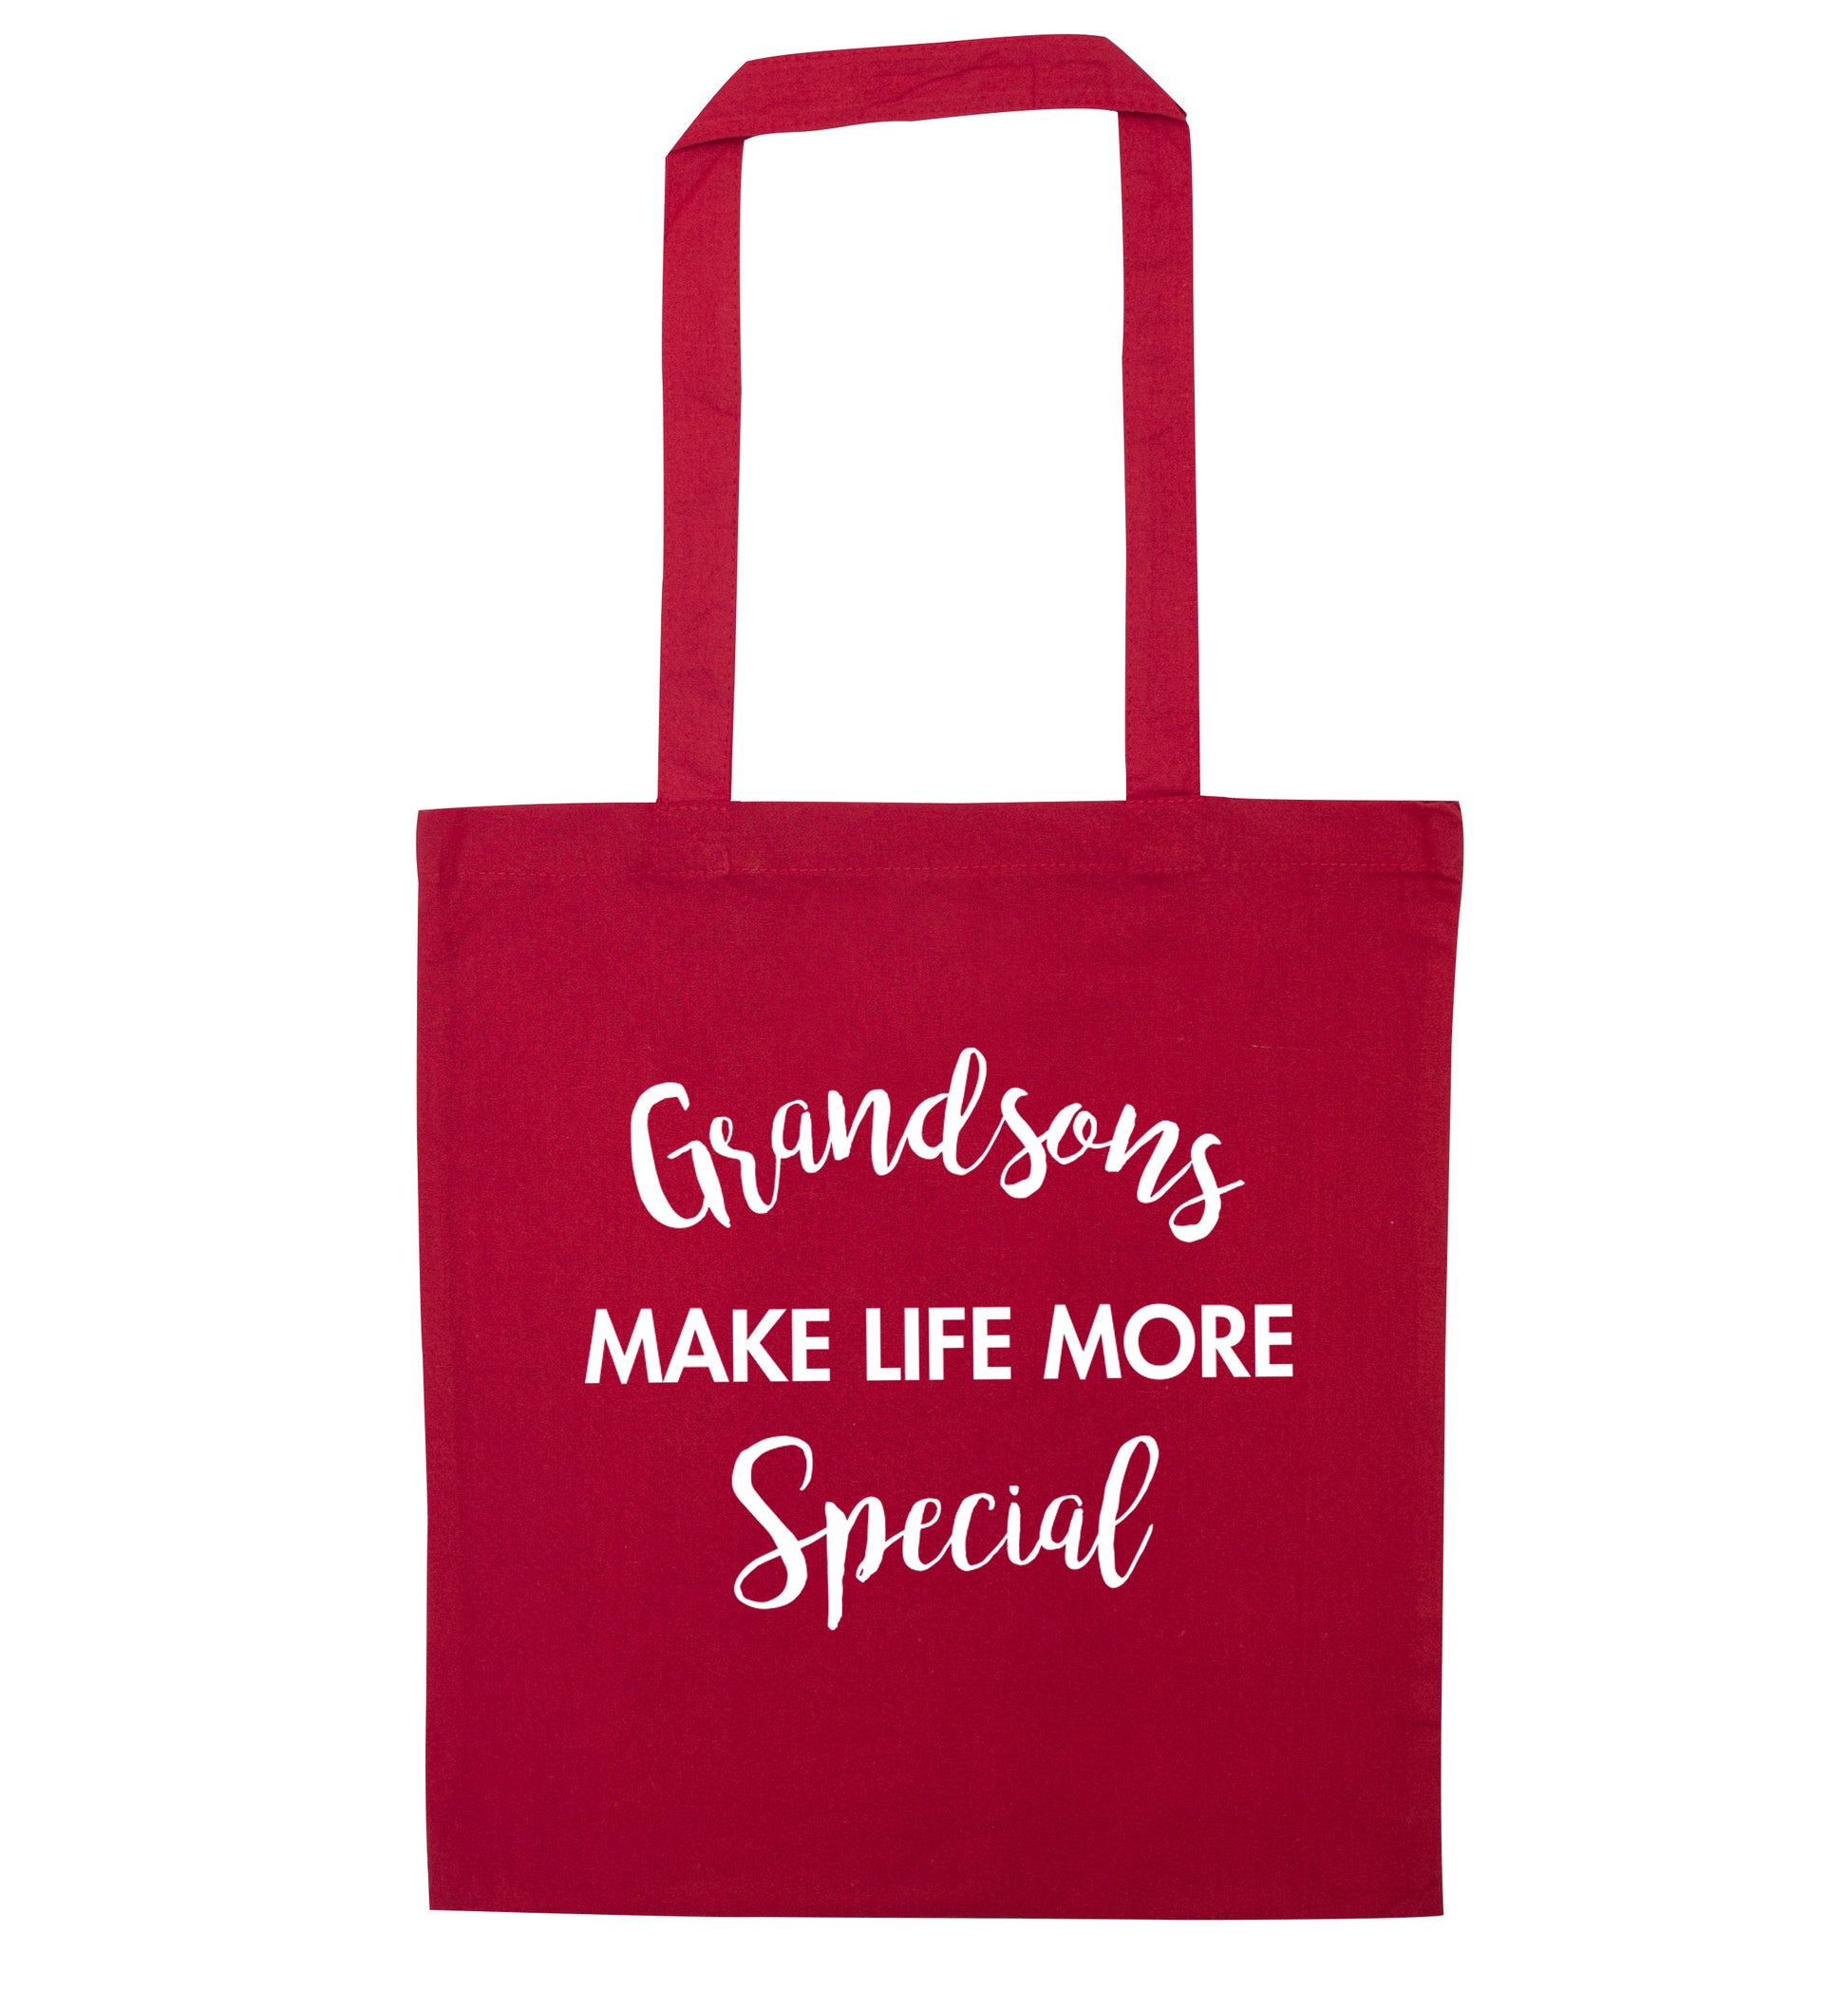 Grandsons make life more special red tote bag